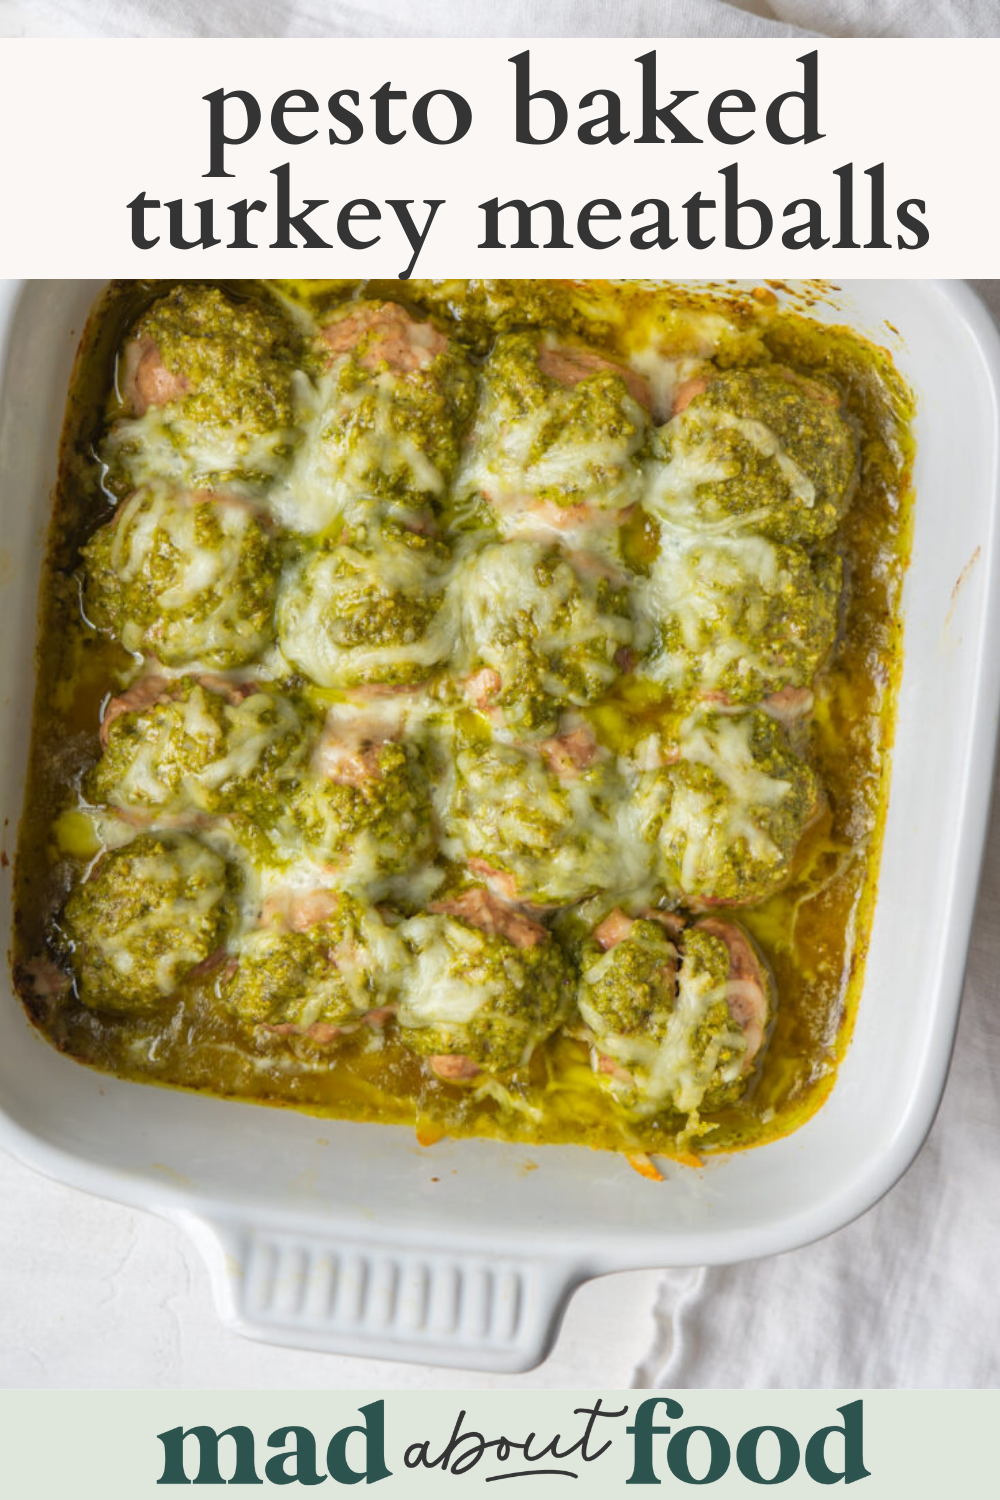 Image for Pinning Pesto Baked Turkey Meatballs recipe on Pinterest